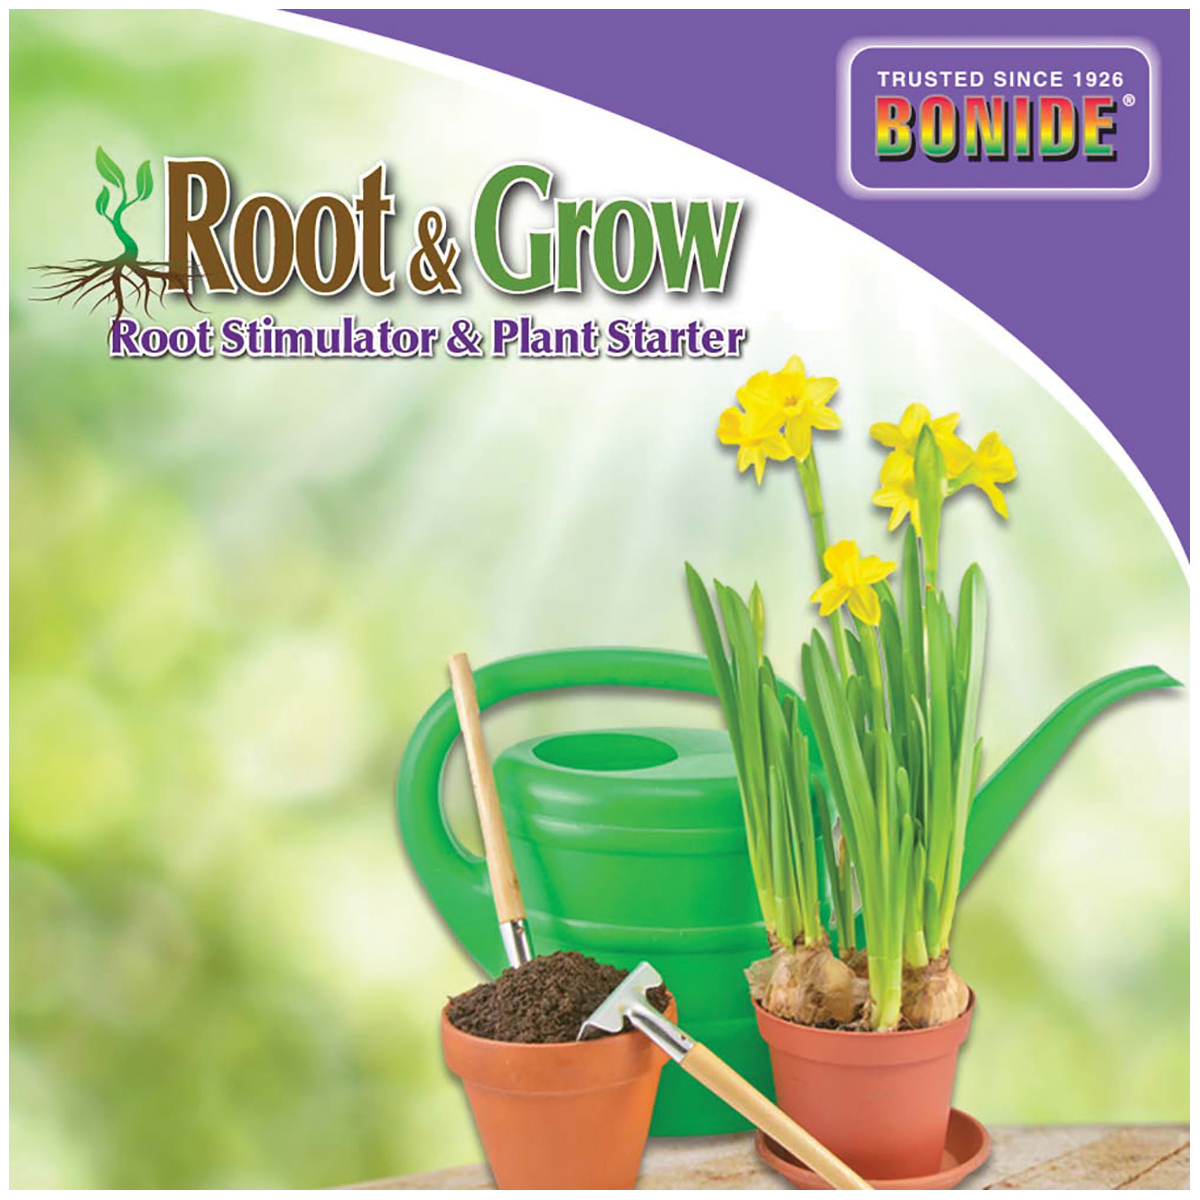 Bonide Root & Grow 412 Root Stimulator, 1 qt, Liquid, 4-10-3 N-P-K Ratio - 3